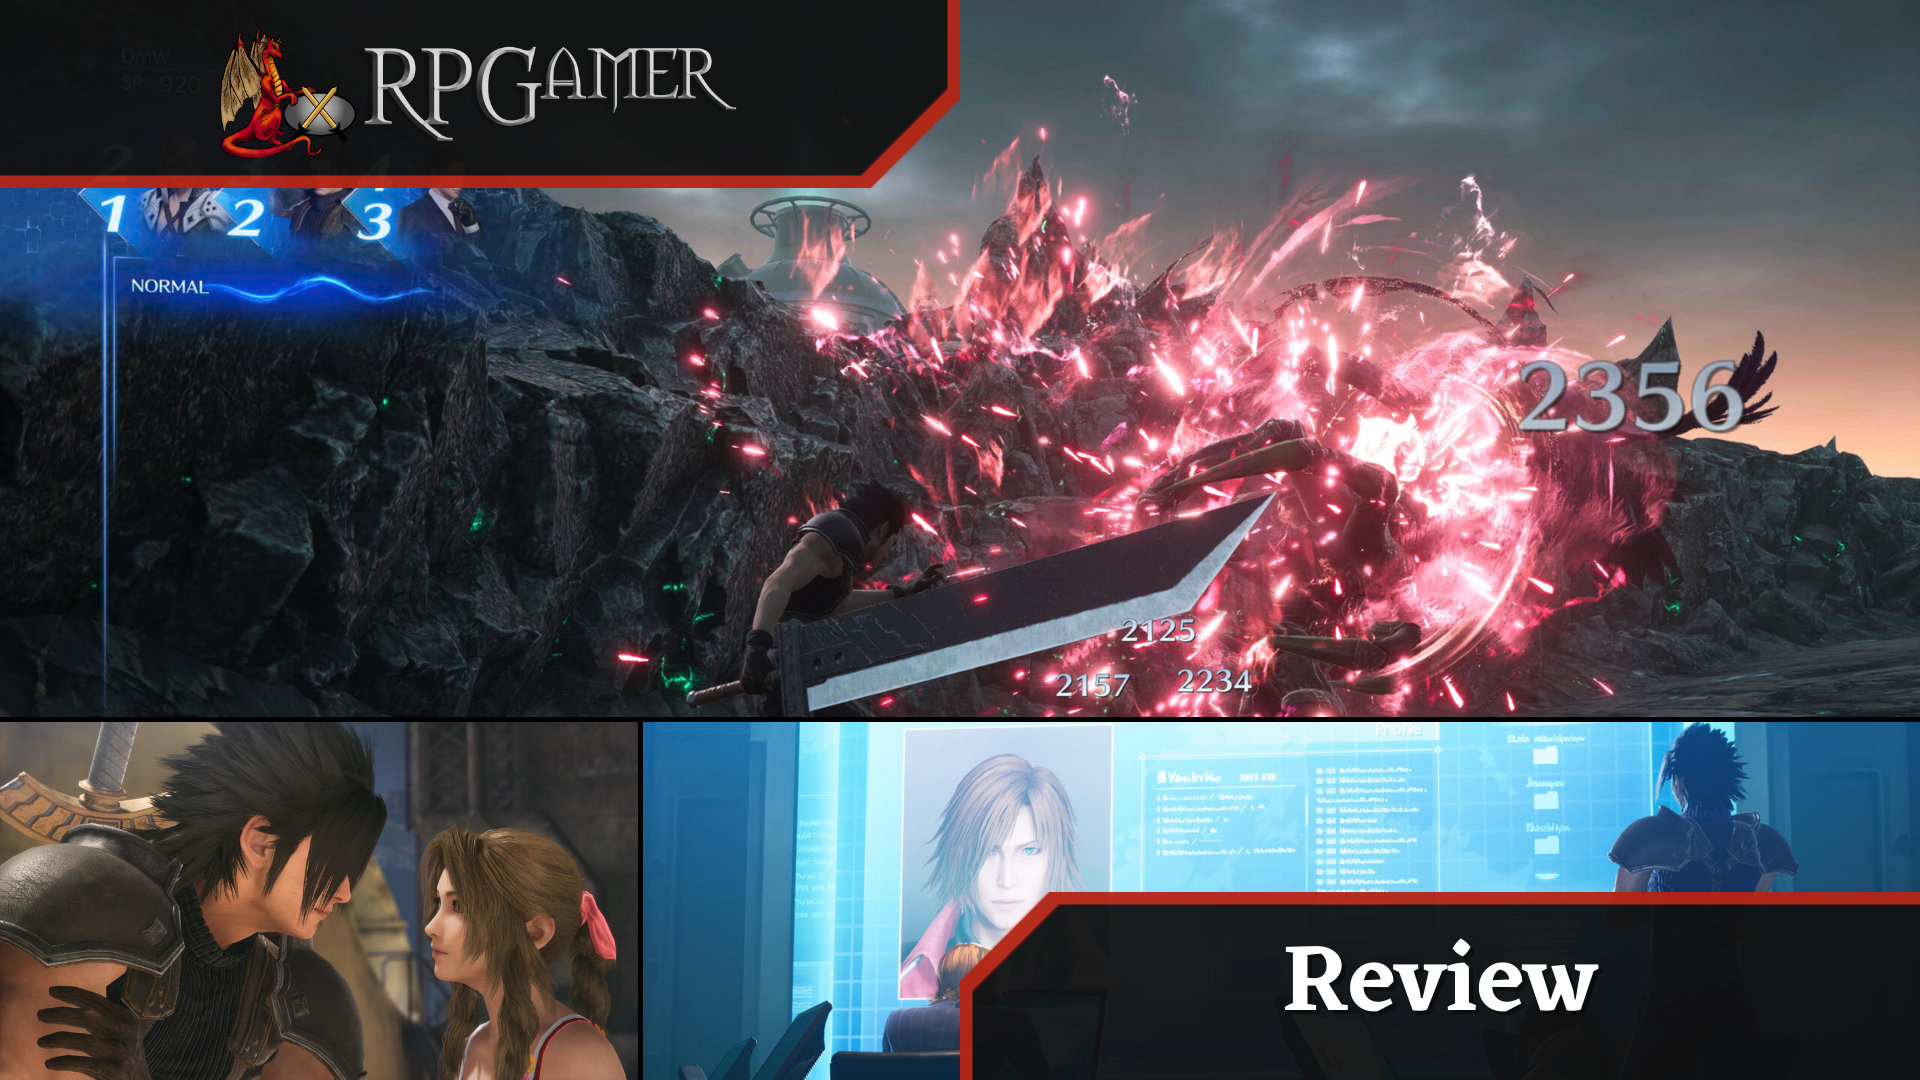 Crisis Core Final Fantasy 7 Reunion review - enjoyably frivolous